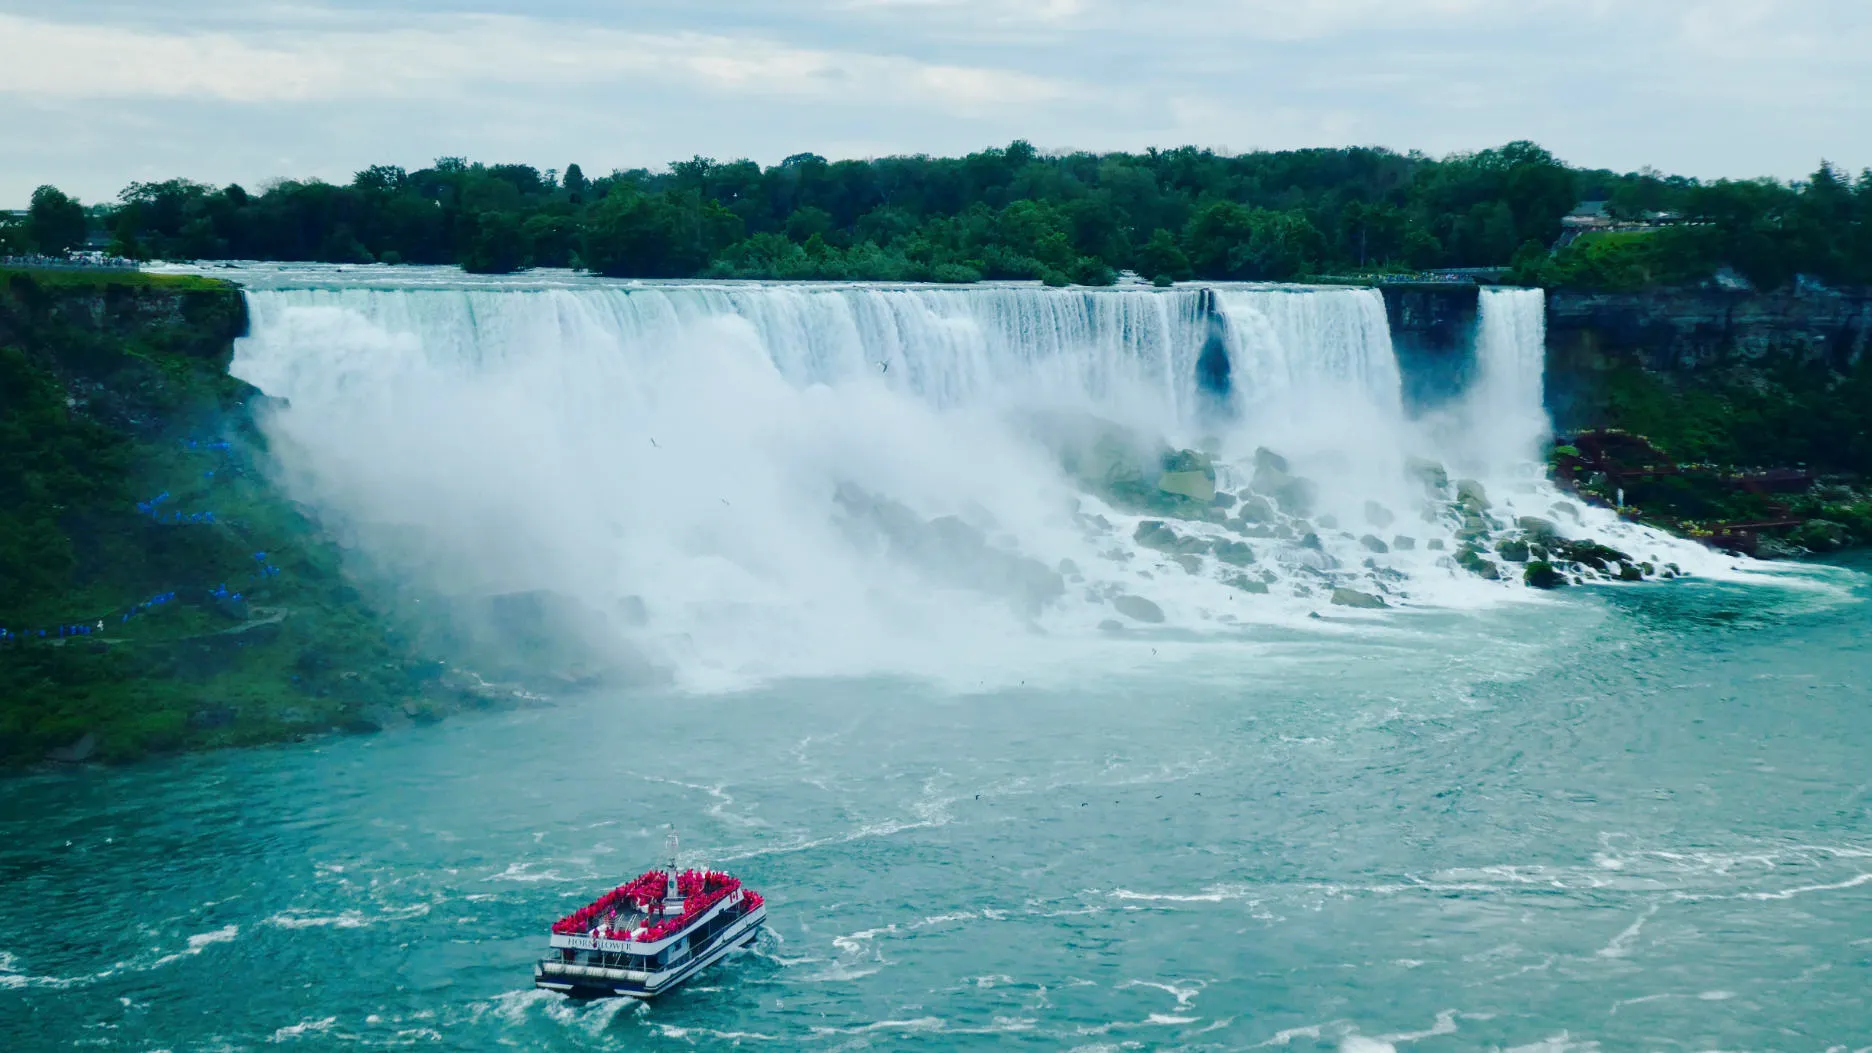 Visiter les chutes du Niagara : le guide complet